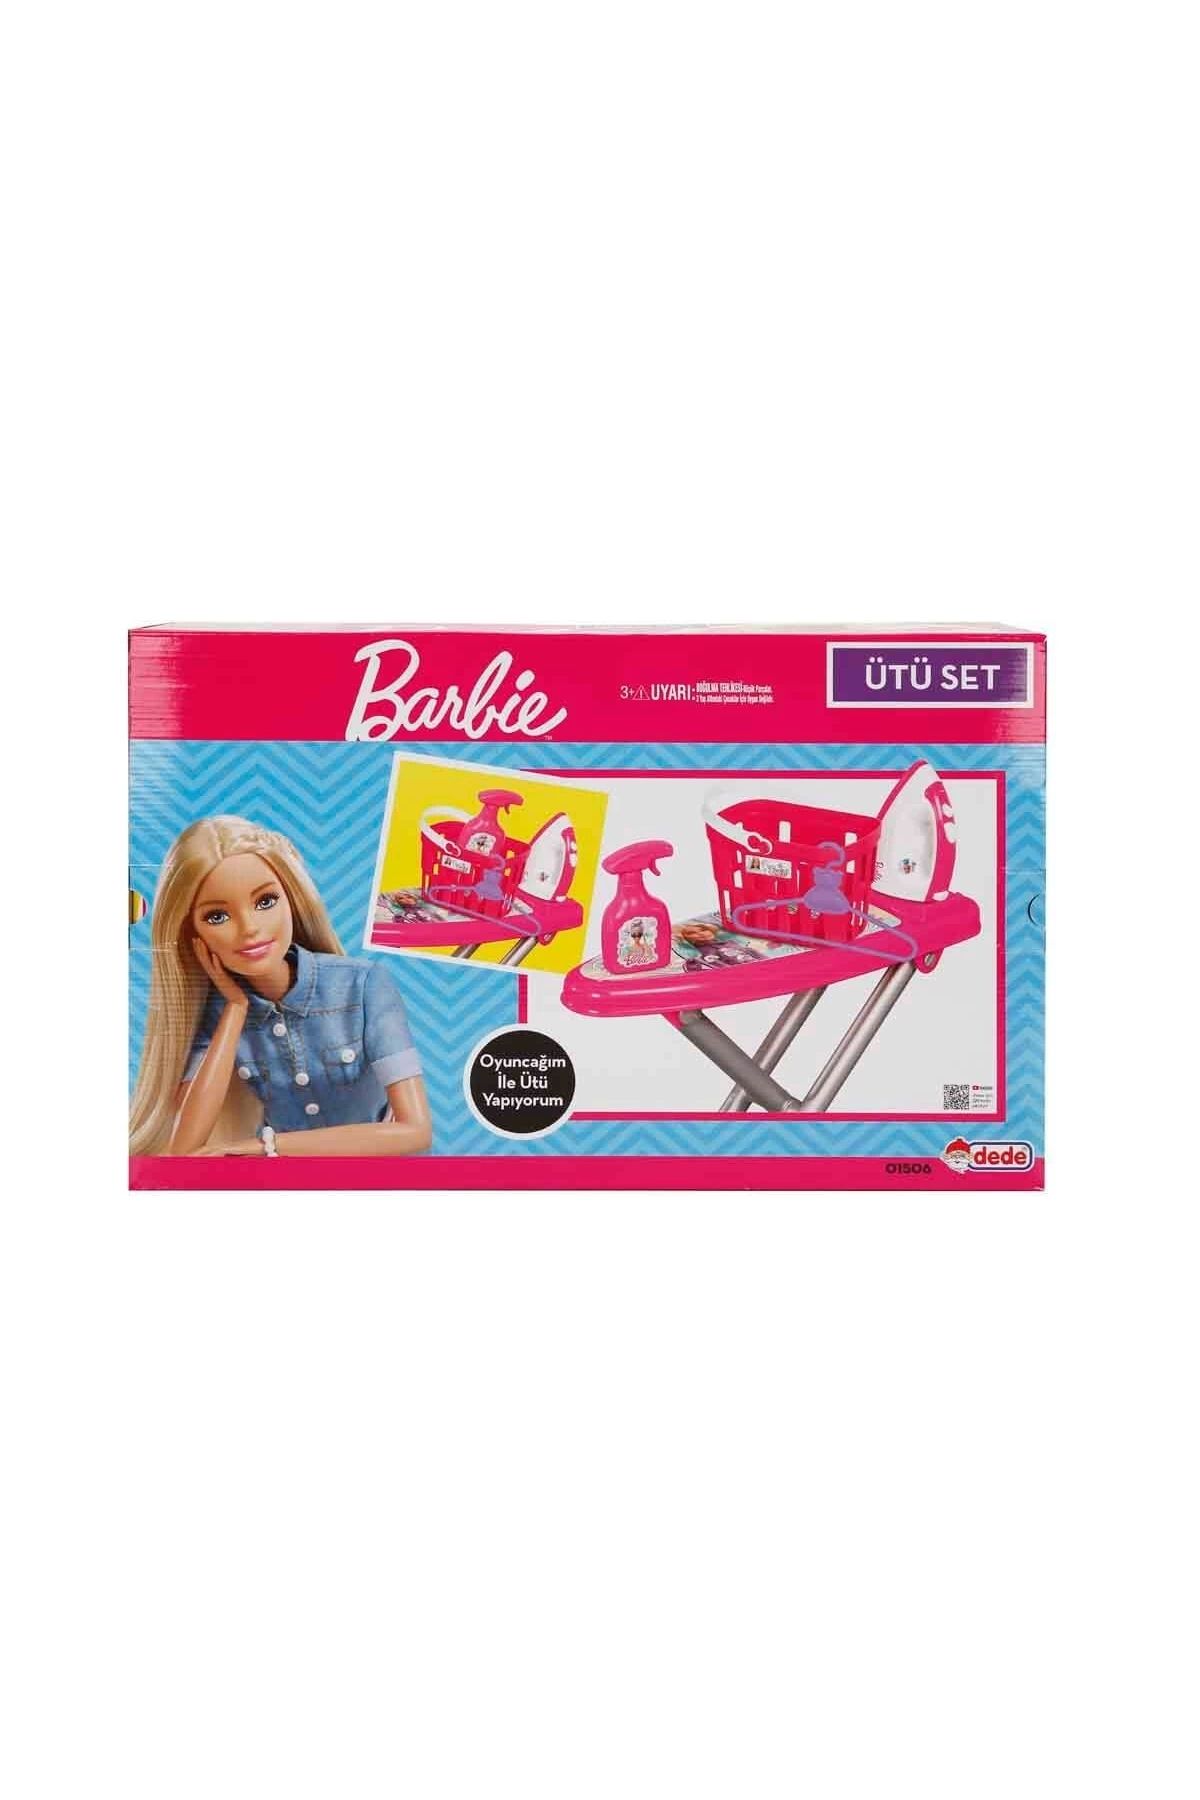 DEDE Barbie Ütü Seti